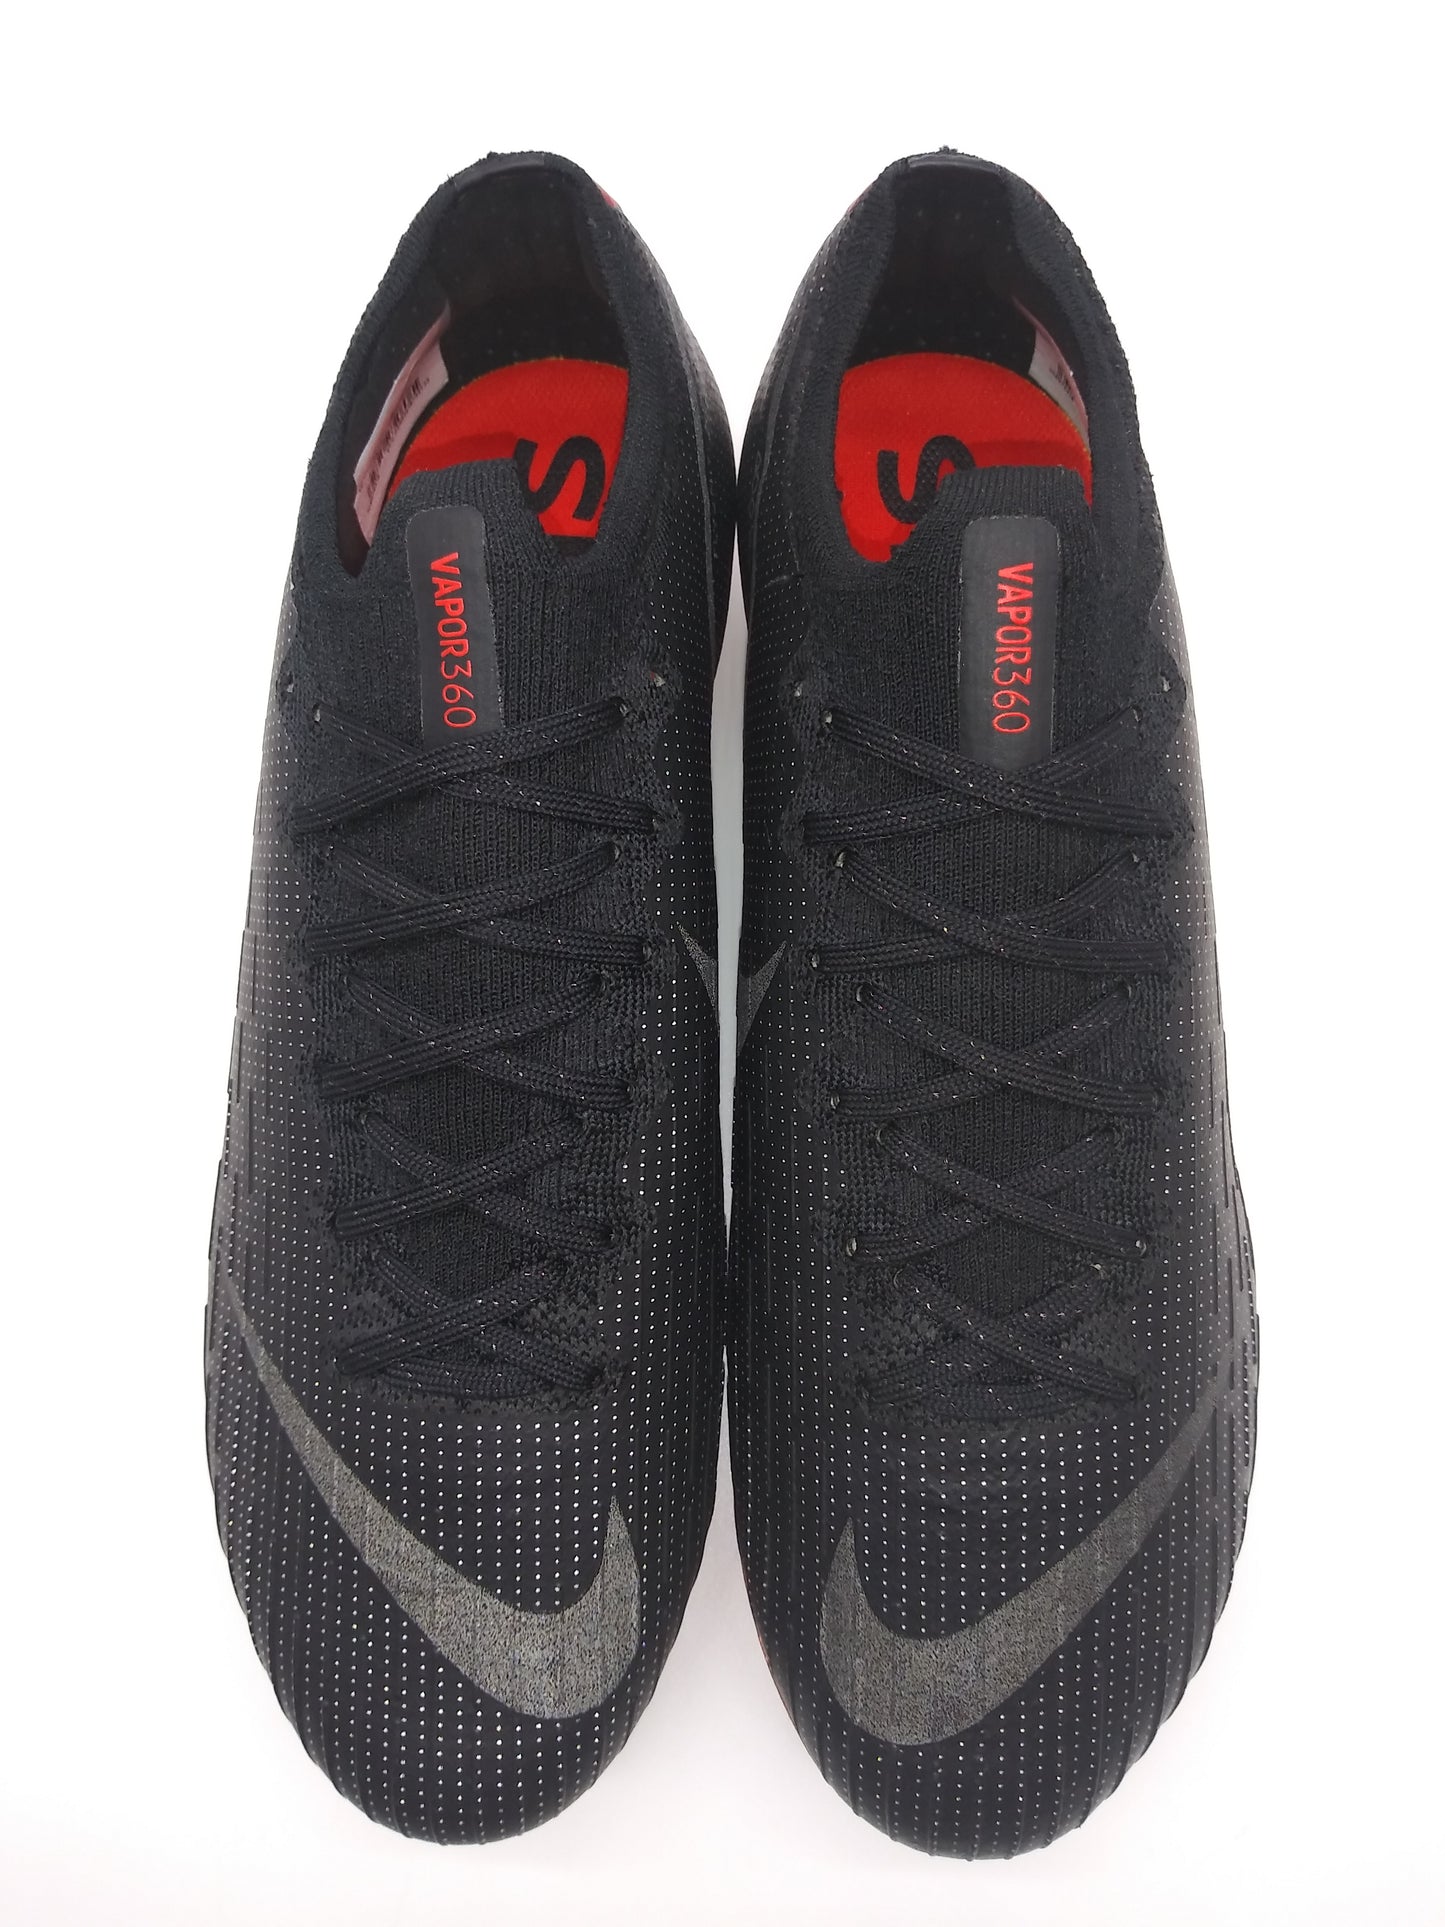 Nike Vapor 12 Elite SE FG Black Red